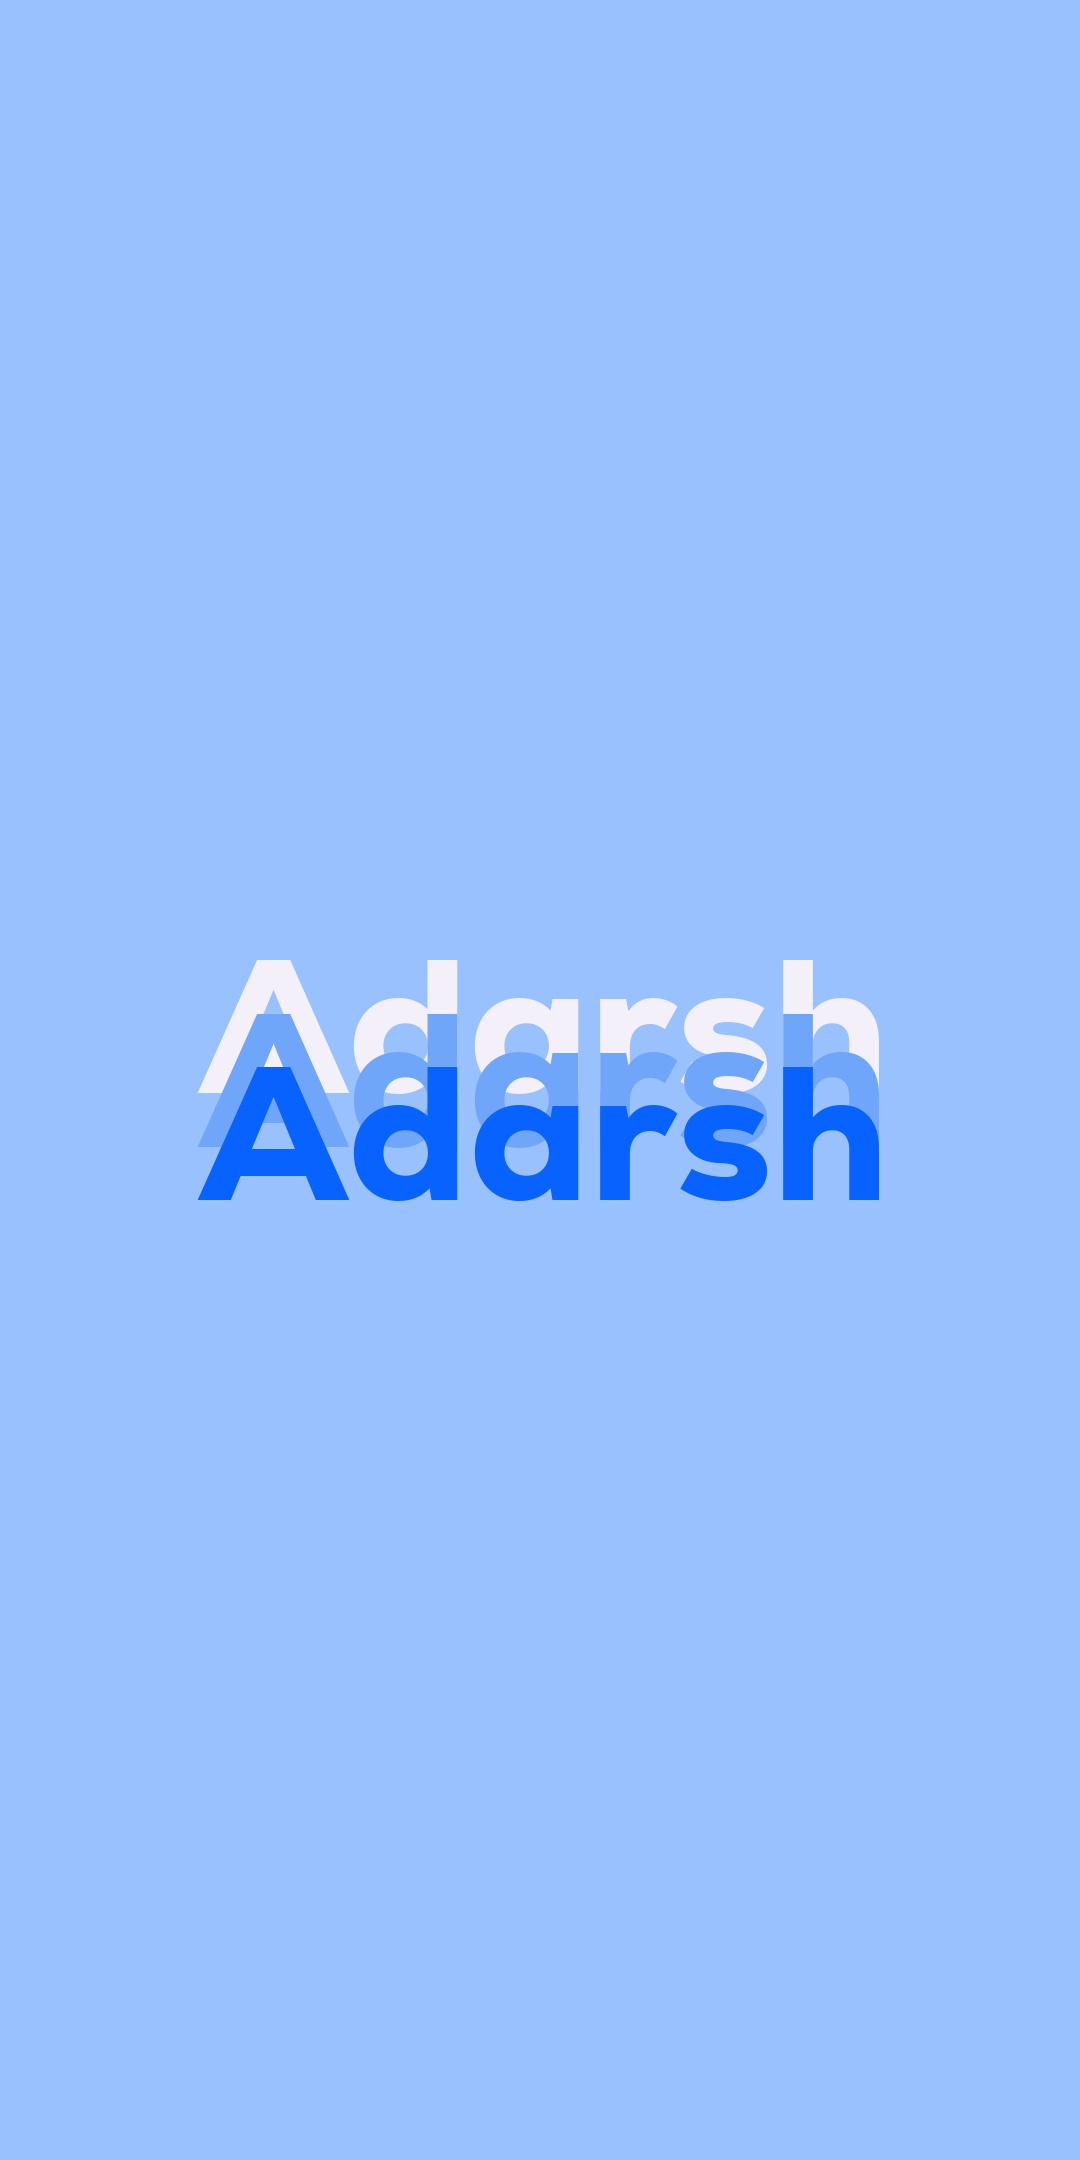 AVR Royal Logo by Adarsh Bhaskaran on Dribbble